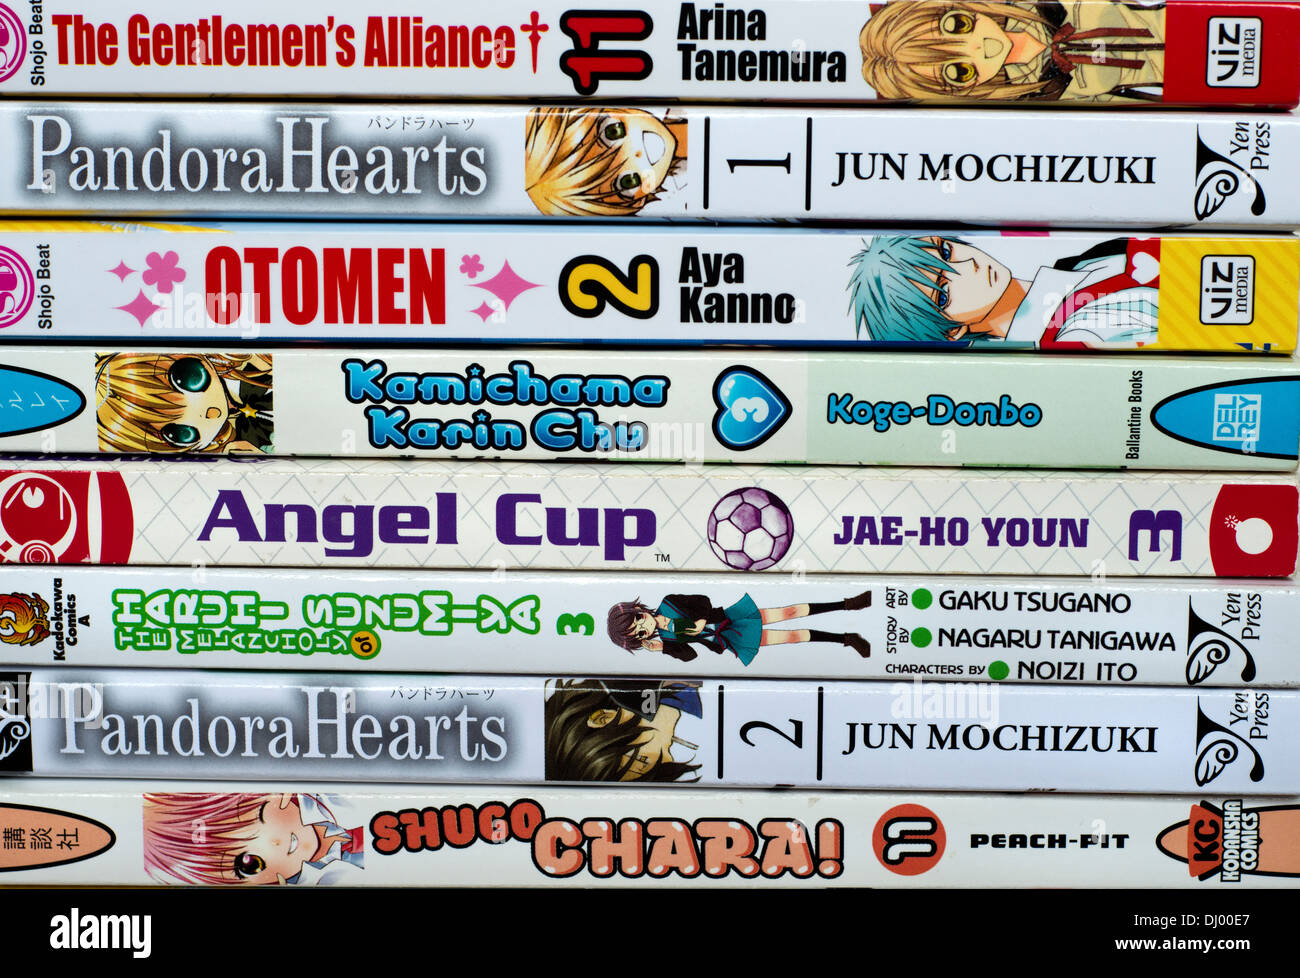 A selection of Japanese Manga books Stock Photo